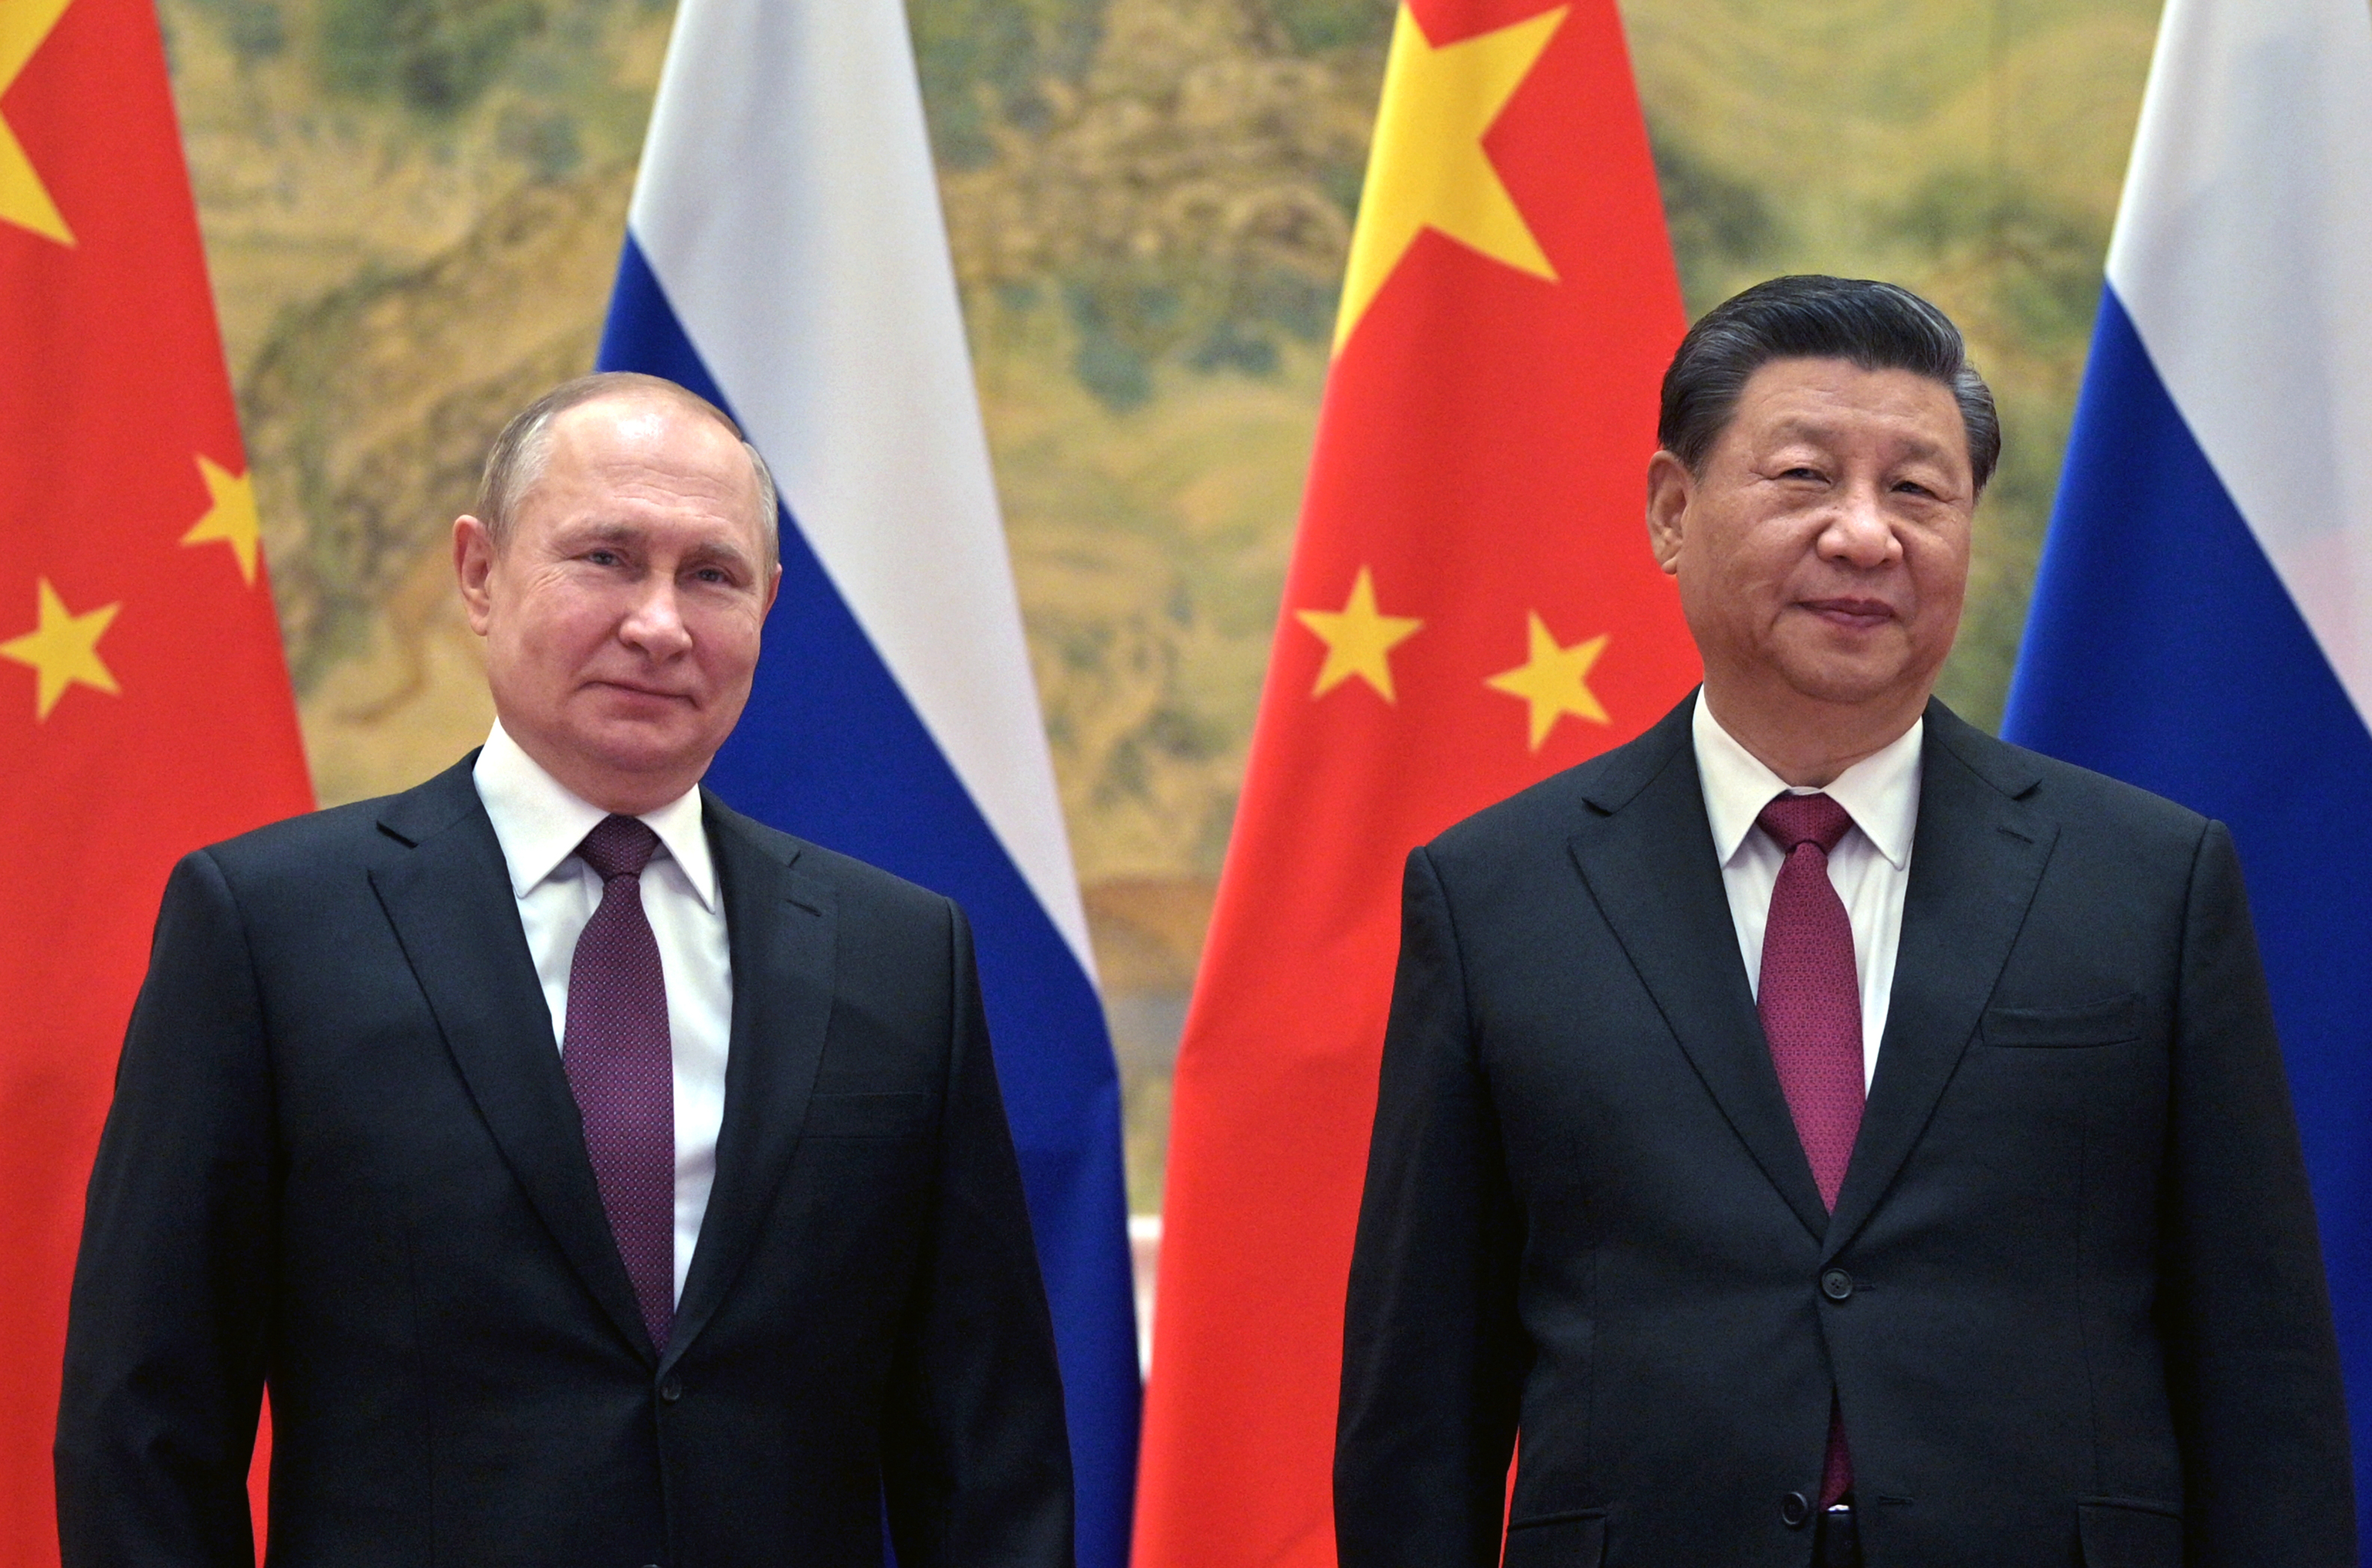 Los presidentes Vladimir Putin y Xi Jinping.